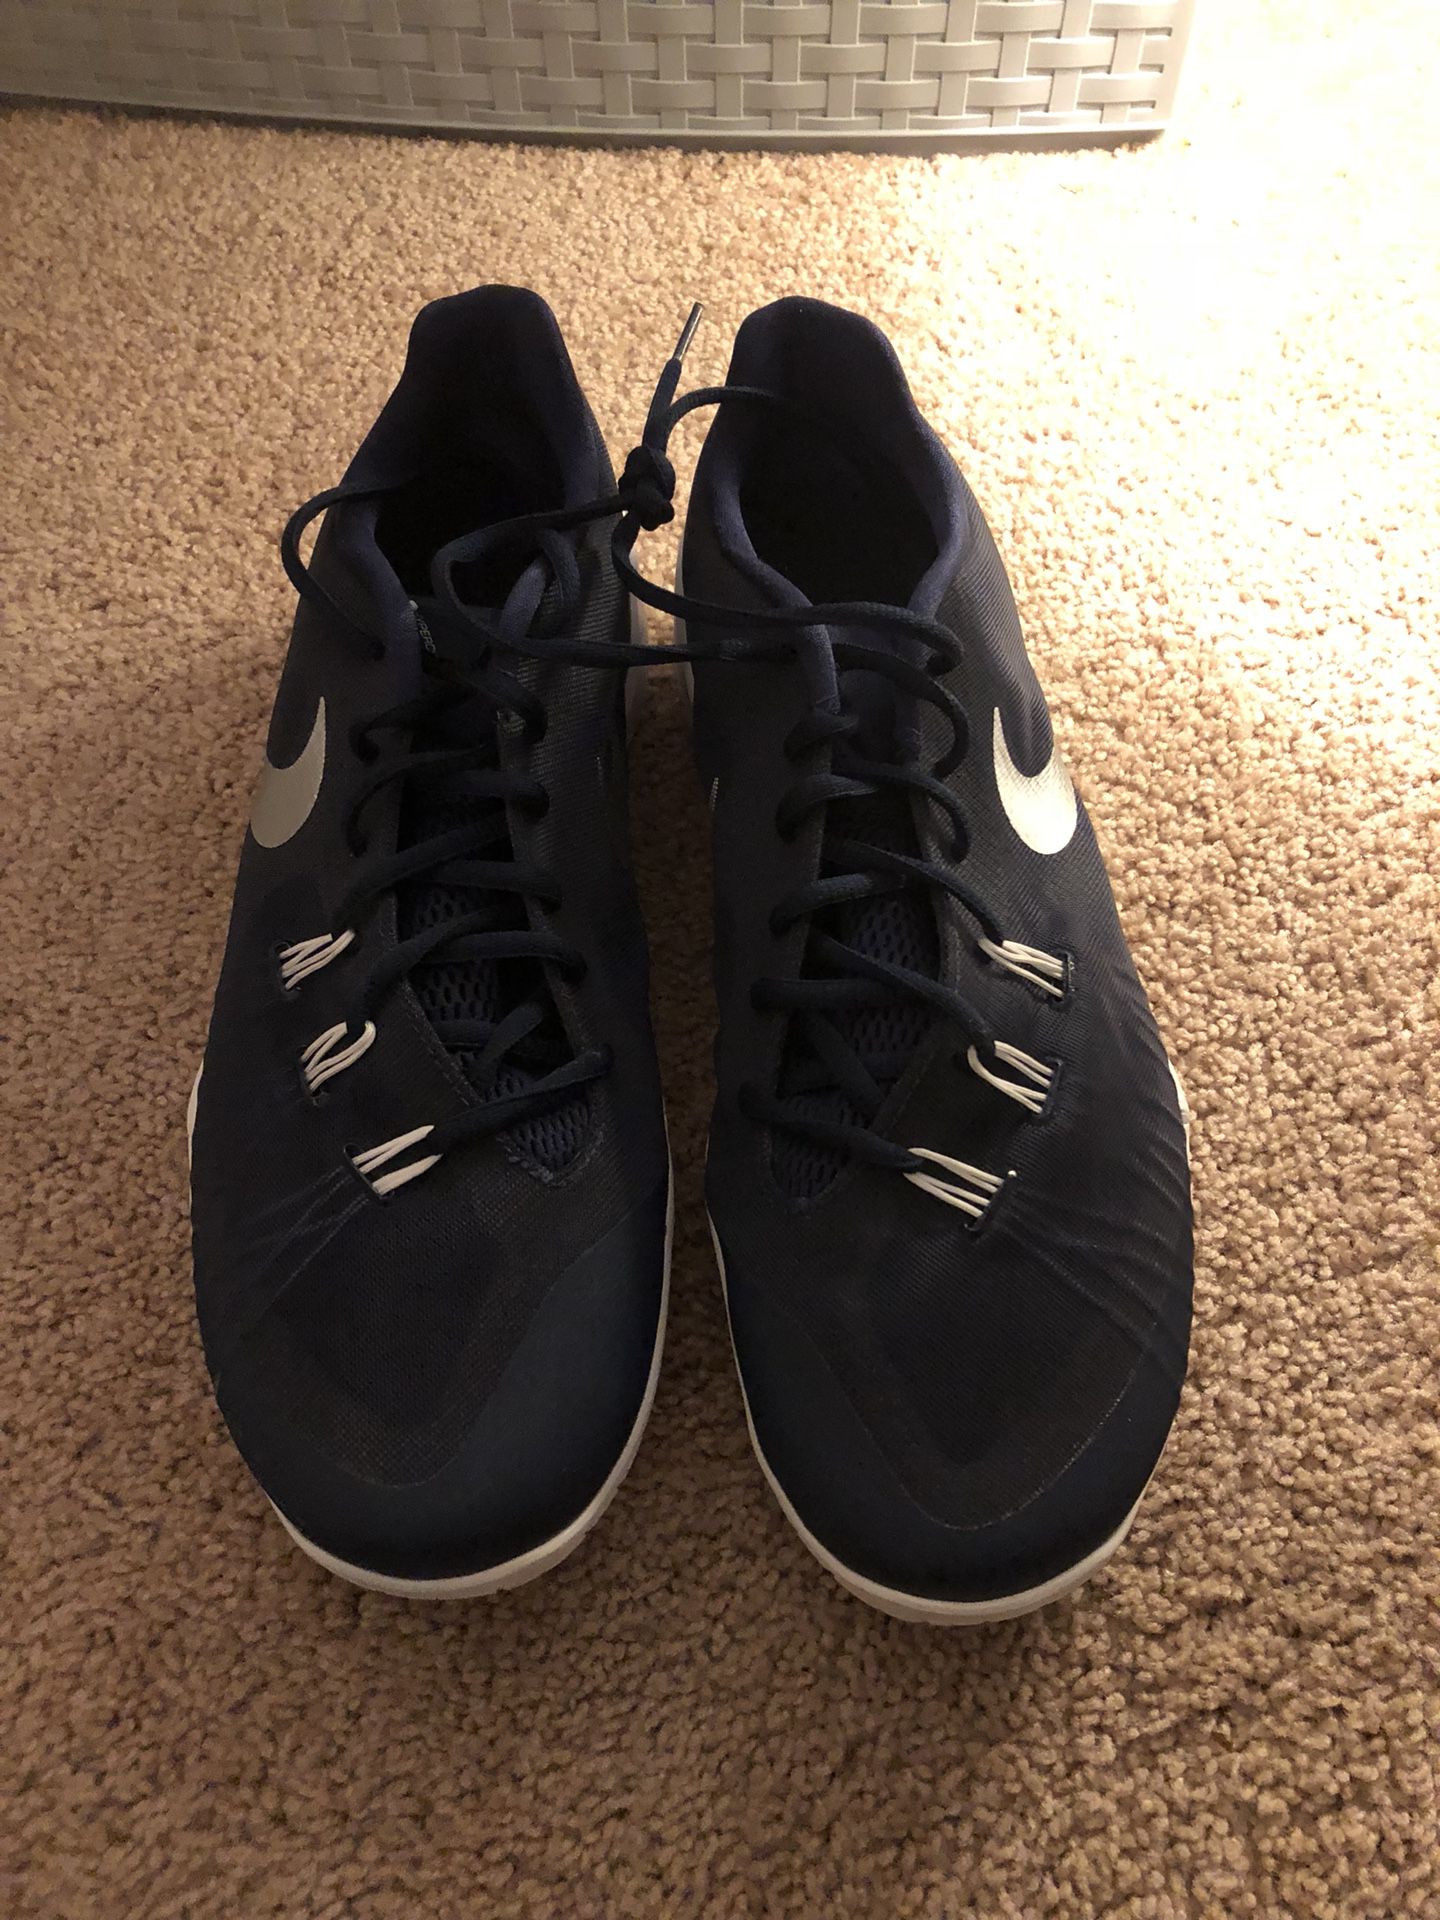 Nike Hyperchase Basketball Shoe Size 14